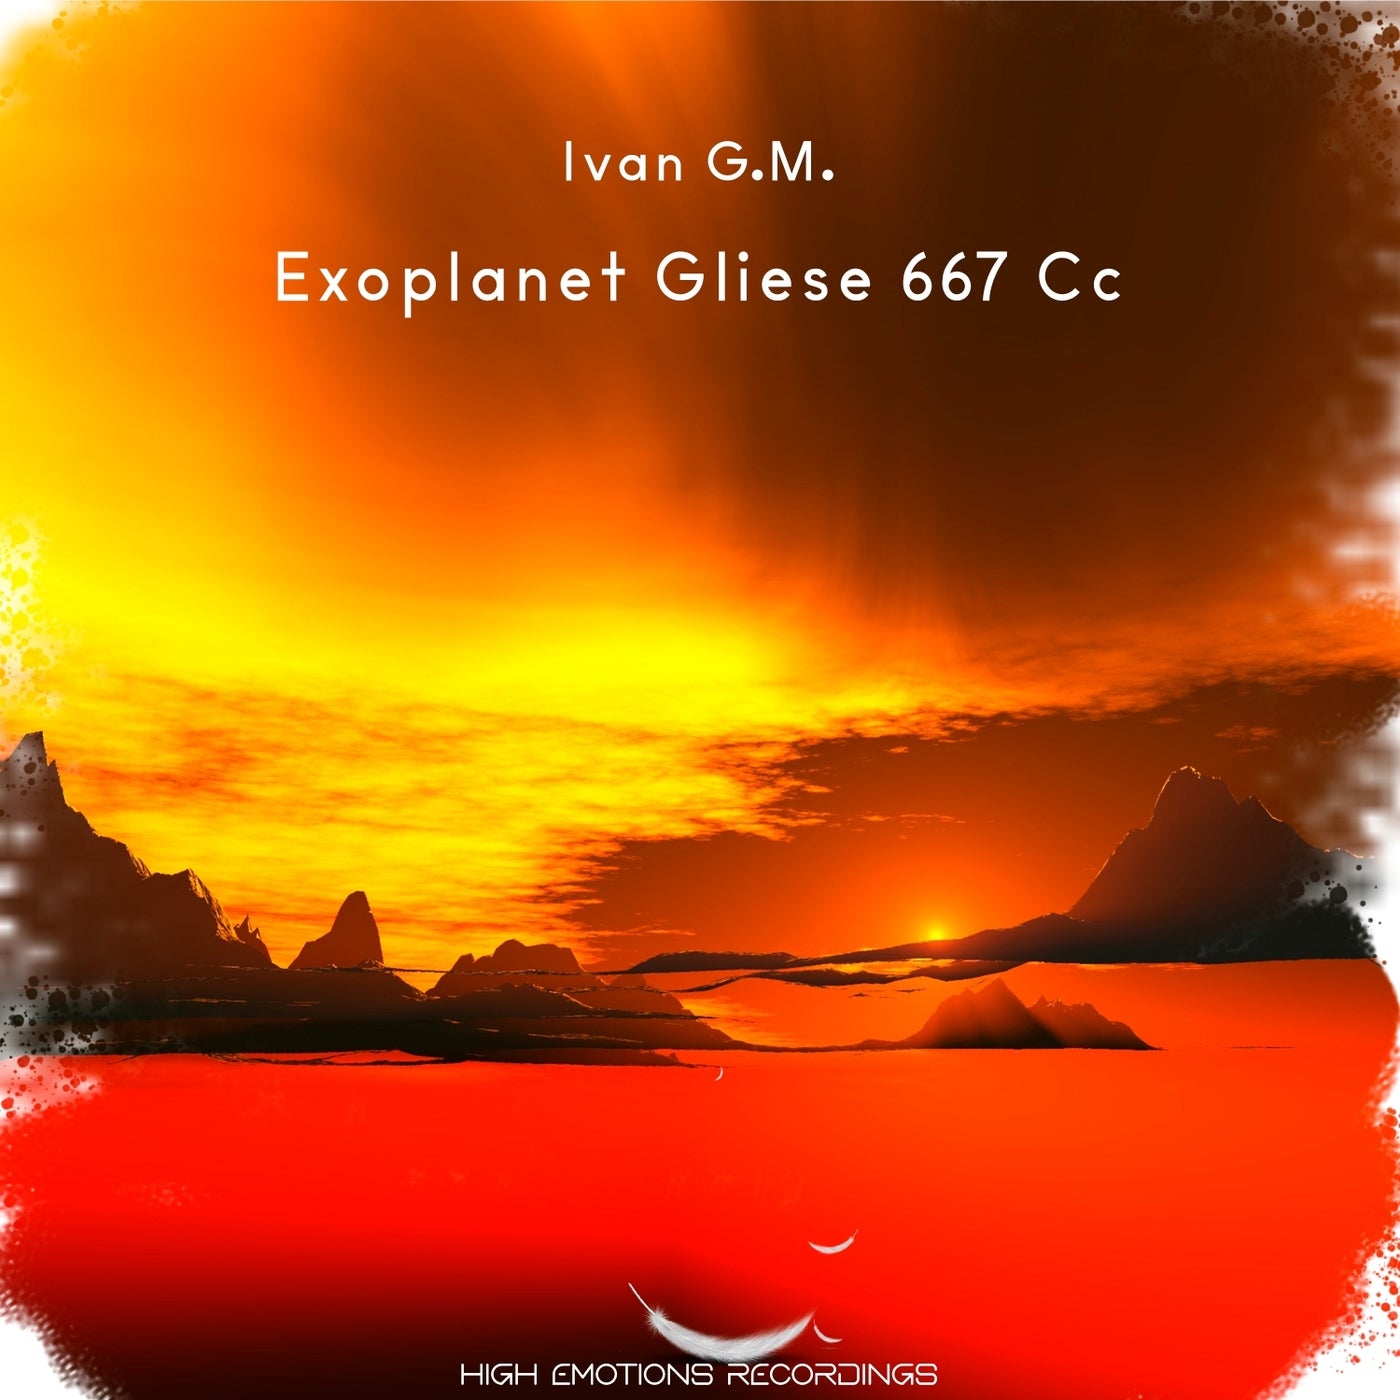 Exoplanet Gliese 667 Cc